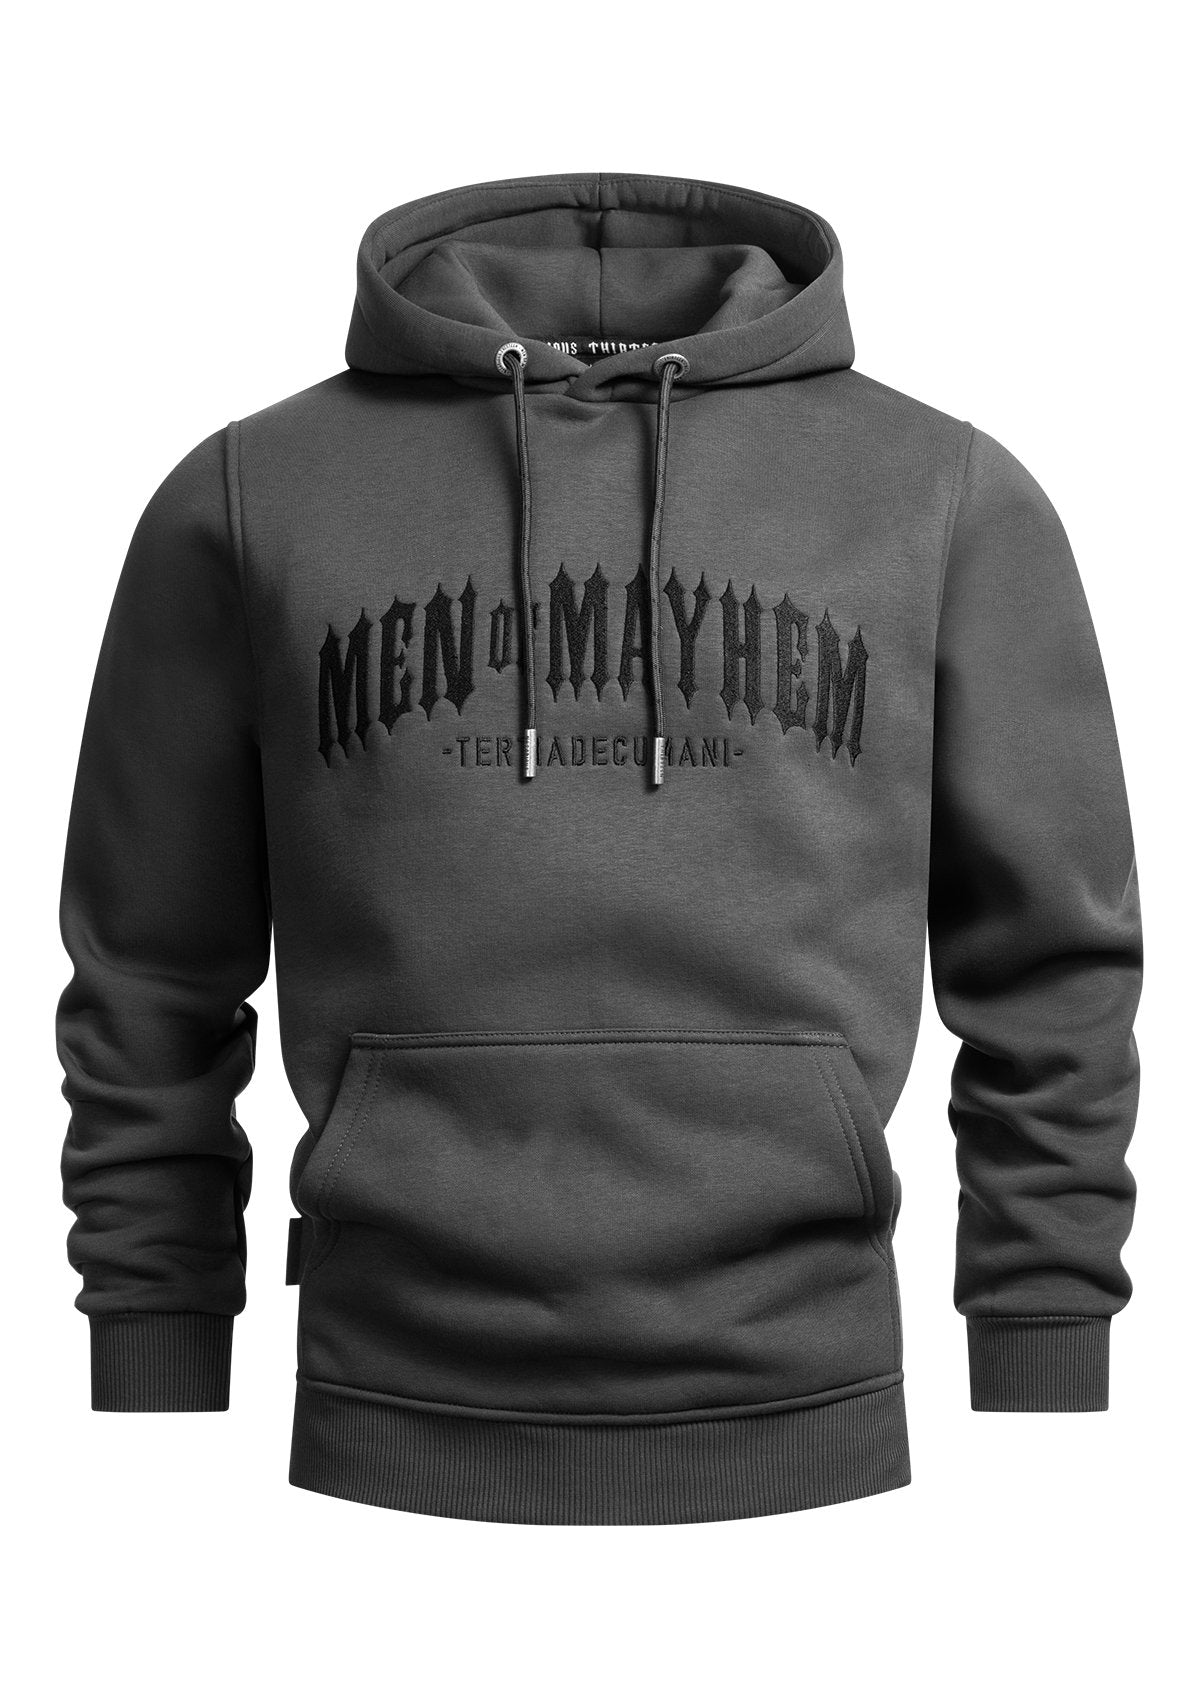 Hoody Mayhem Classic A/S MK3 - MEN OF MAYHEM - ALAIKO-EXCHANGES-MM-M-1050-MH-AS-MK3 - Classic - Grau